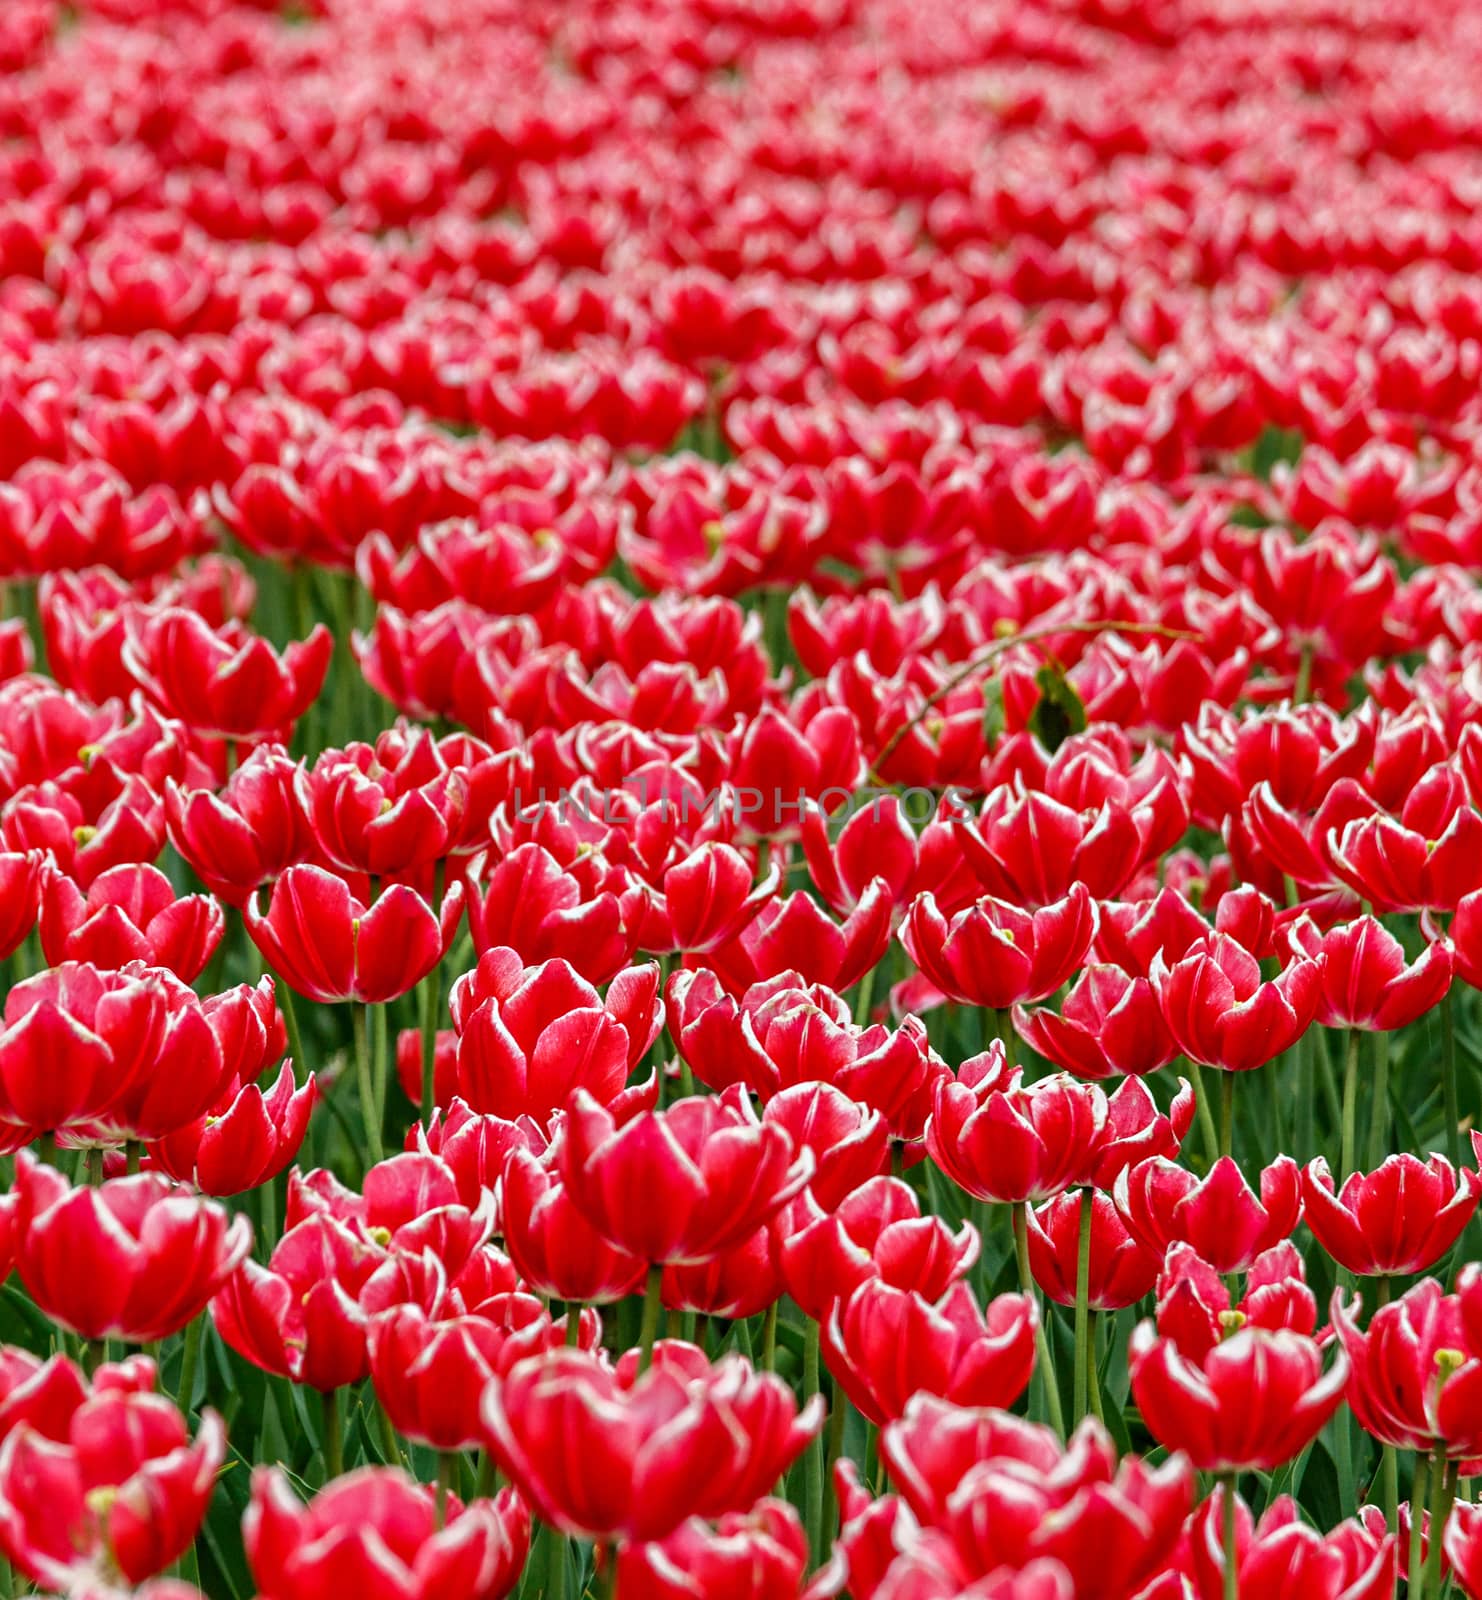 Field of red tulips by dpetrakov